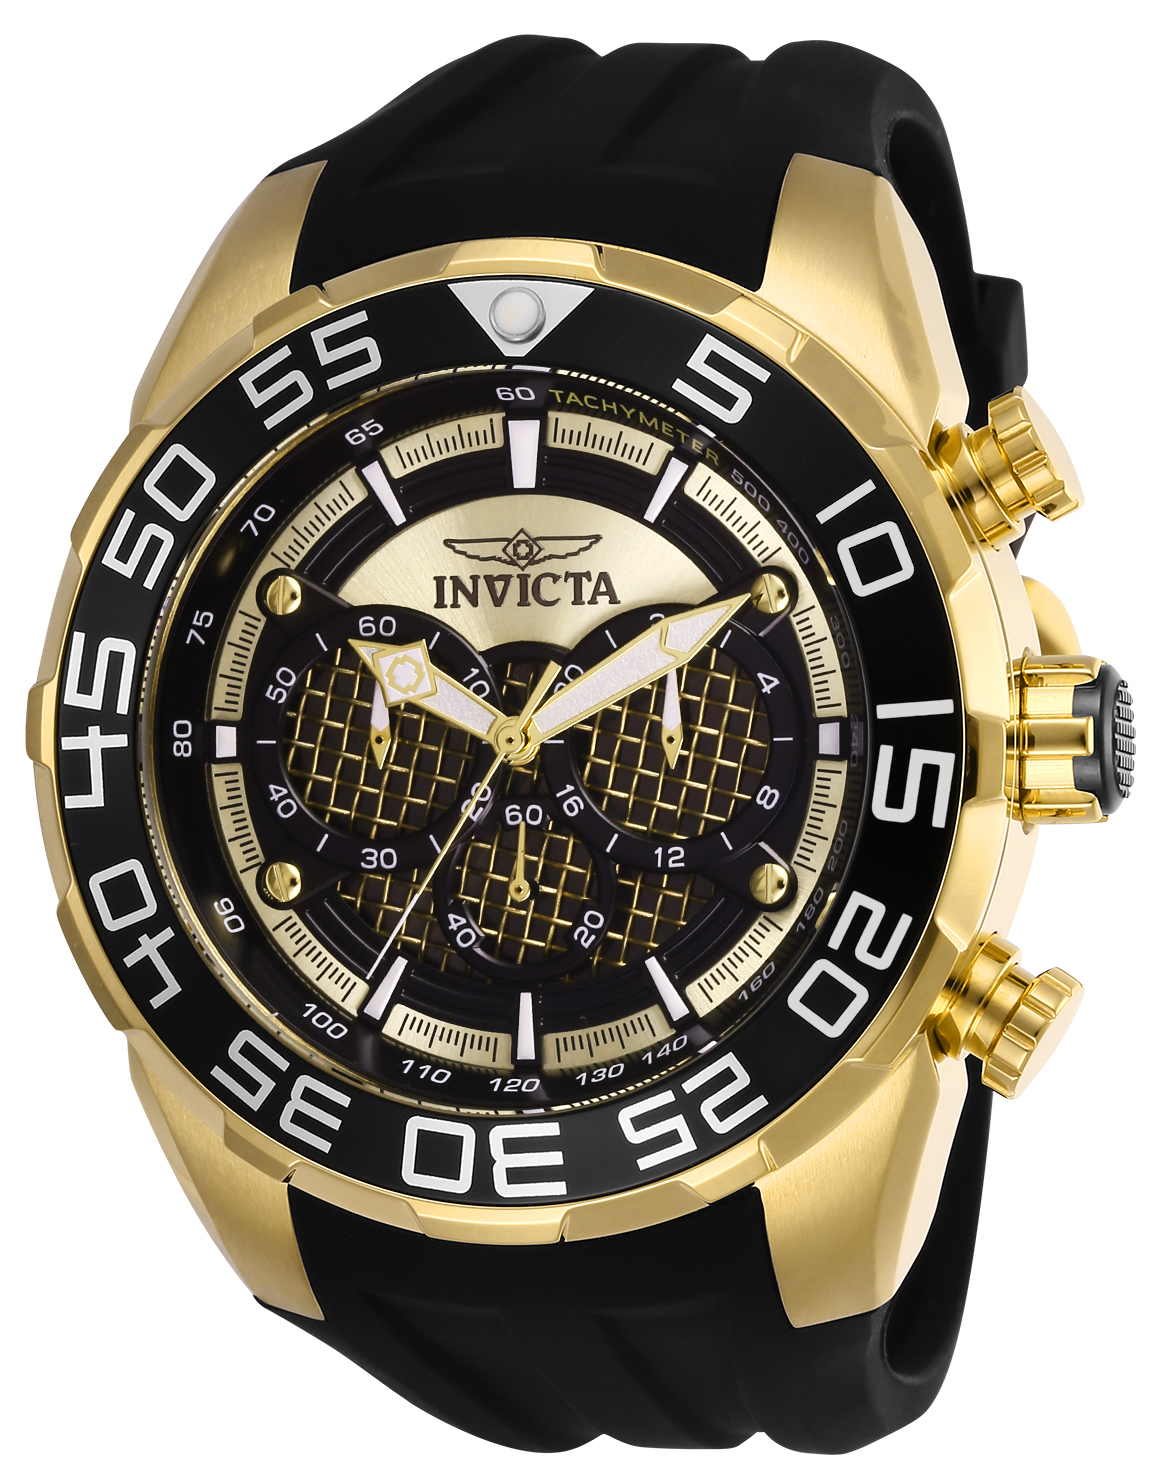 Invicta Speedway SCUBA Men's Watch - 50mm, Black (26301)